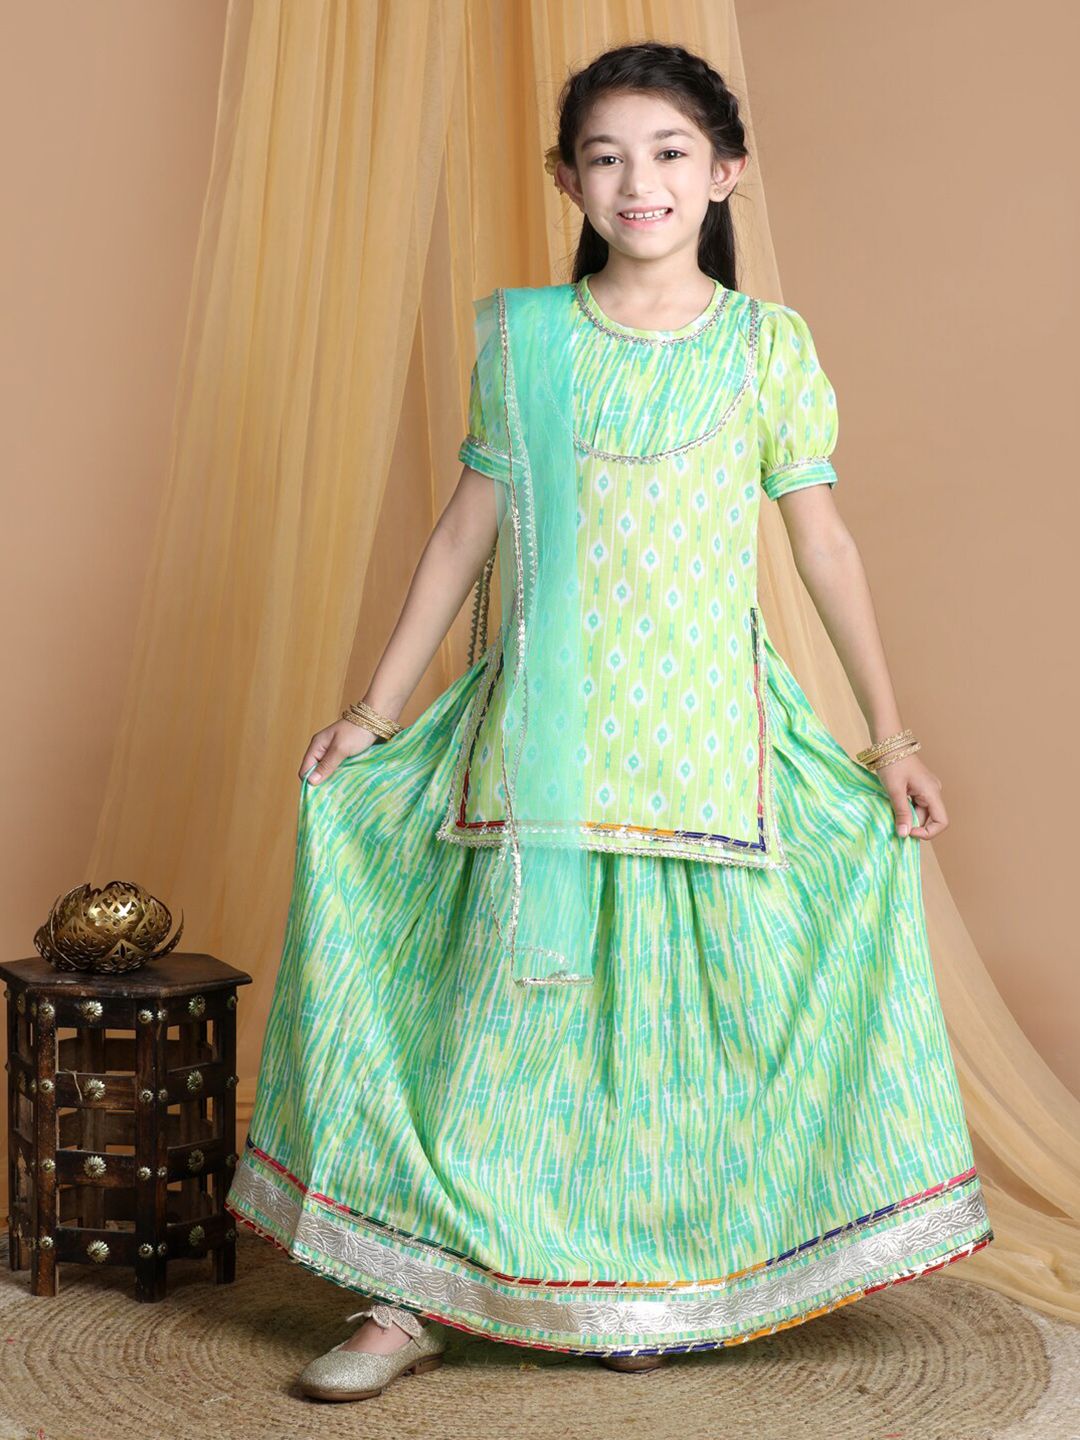 Cutiekins Girls Ethnic Motifs Printed Ready to Wear Lehenga & Blouse With Dupatta Price in India